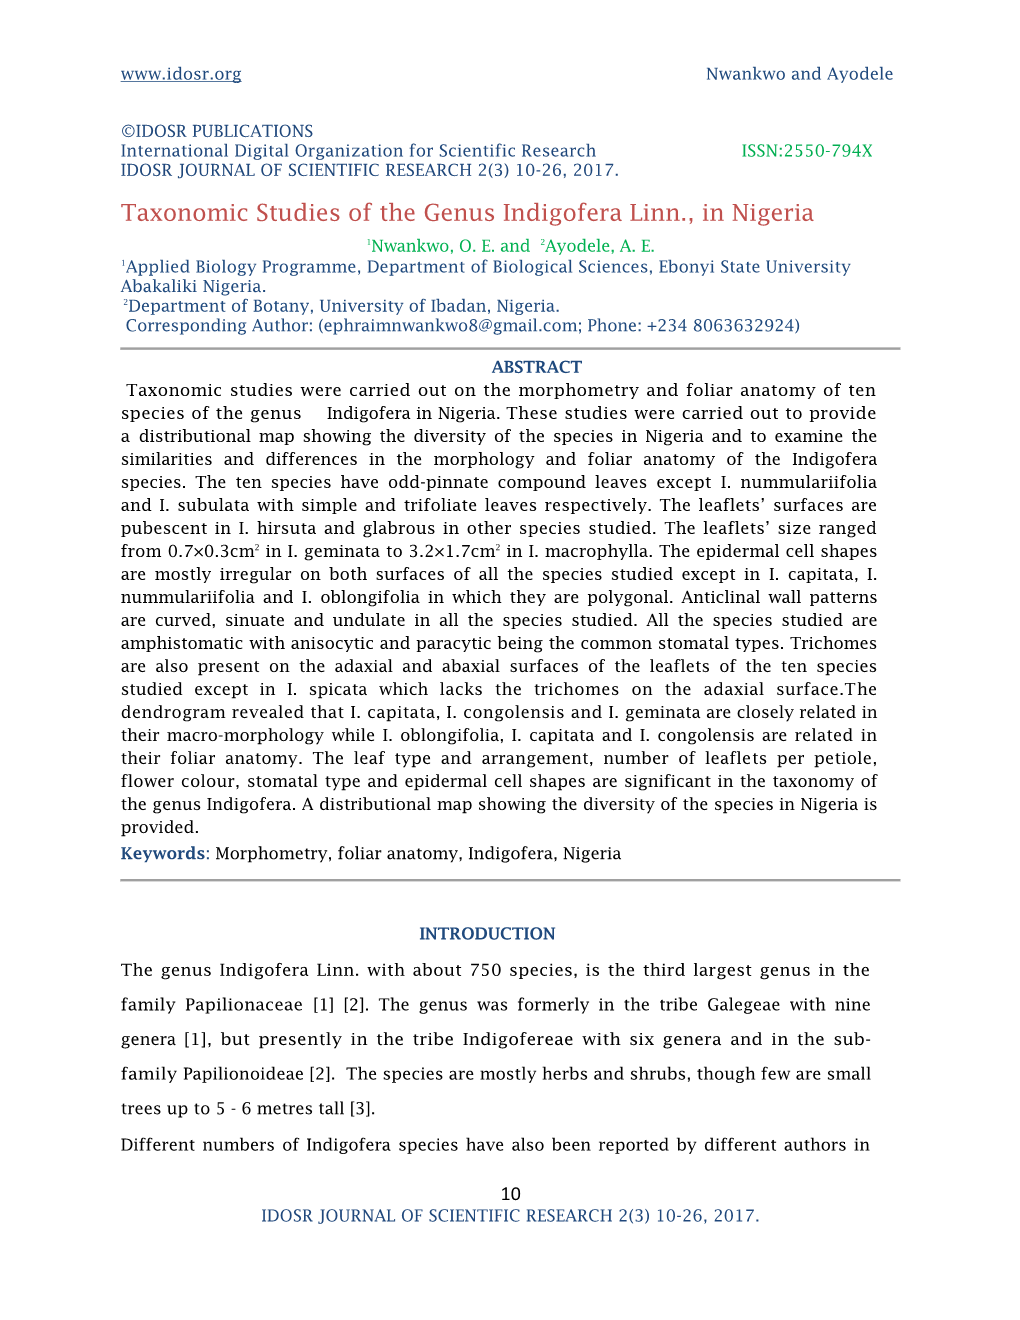 Taxonomic Studies of the Genus Indigofera Linn., in Nigeria 1Nwankwo, O